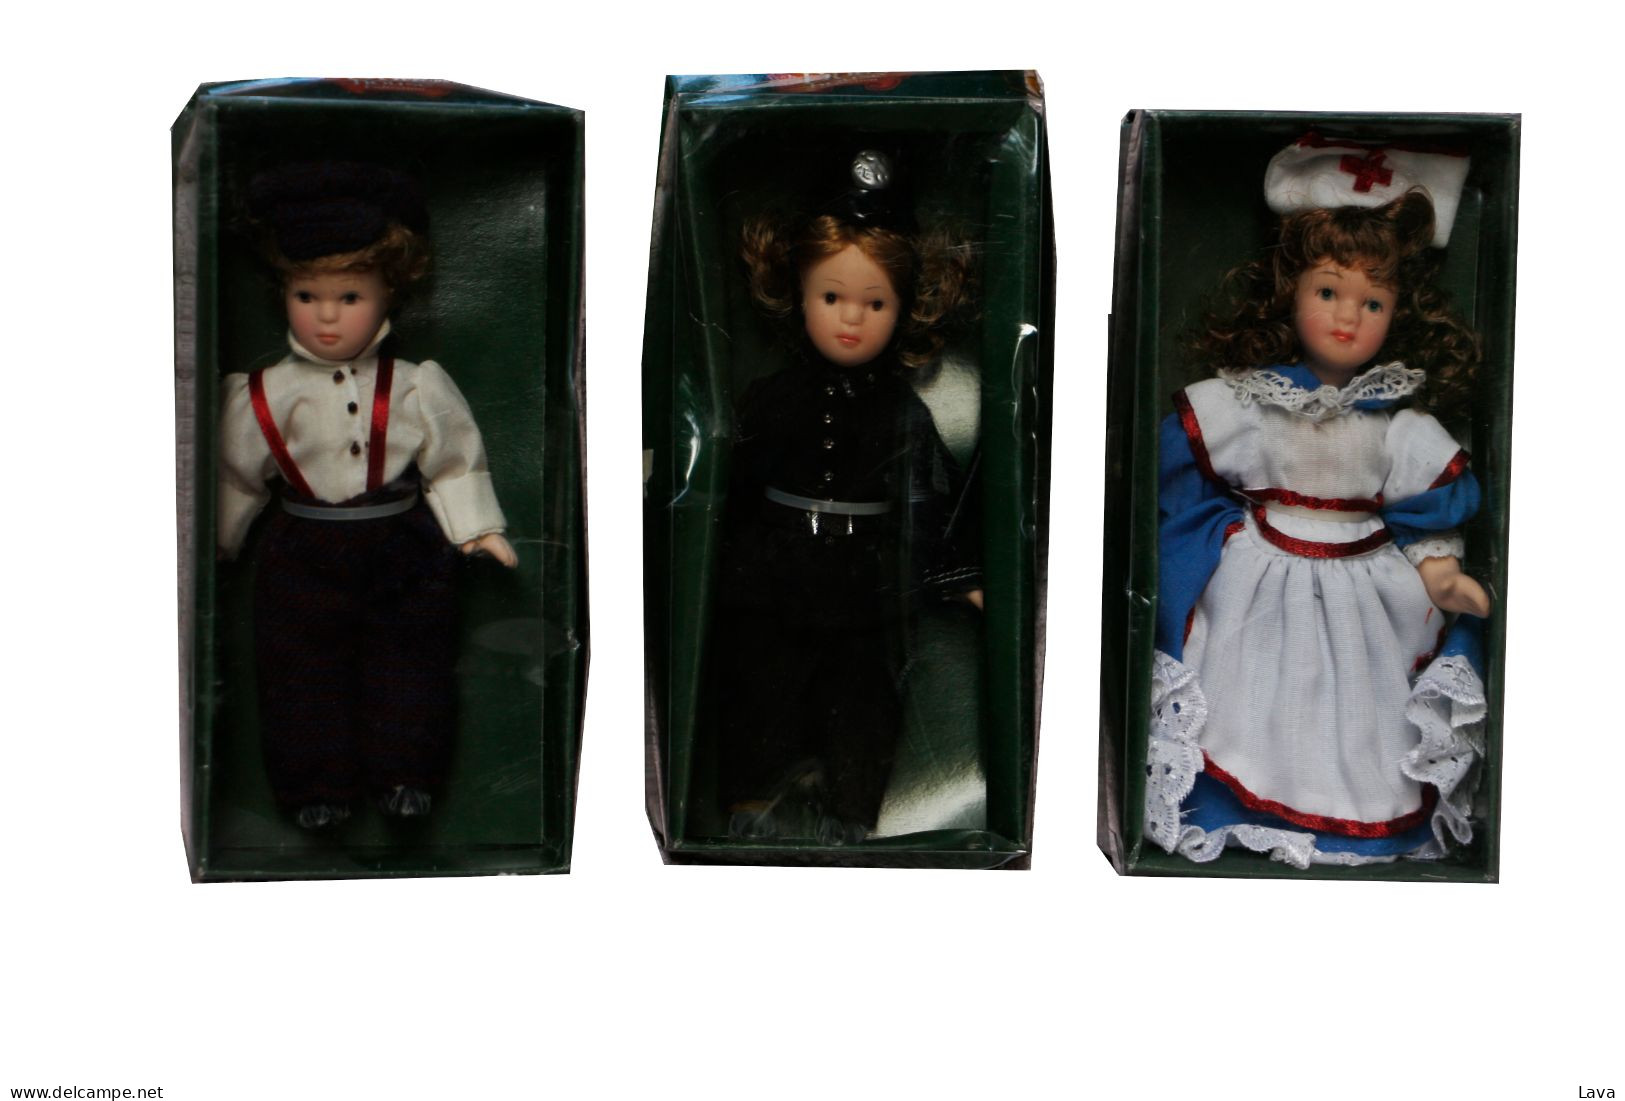 Dolls' House Victorian Mini Porcelain Doll In Original Box - Bambole